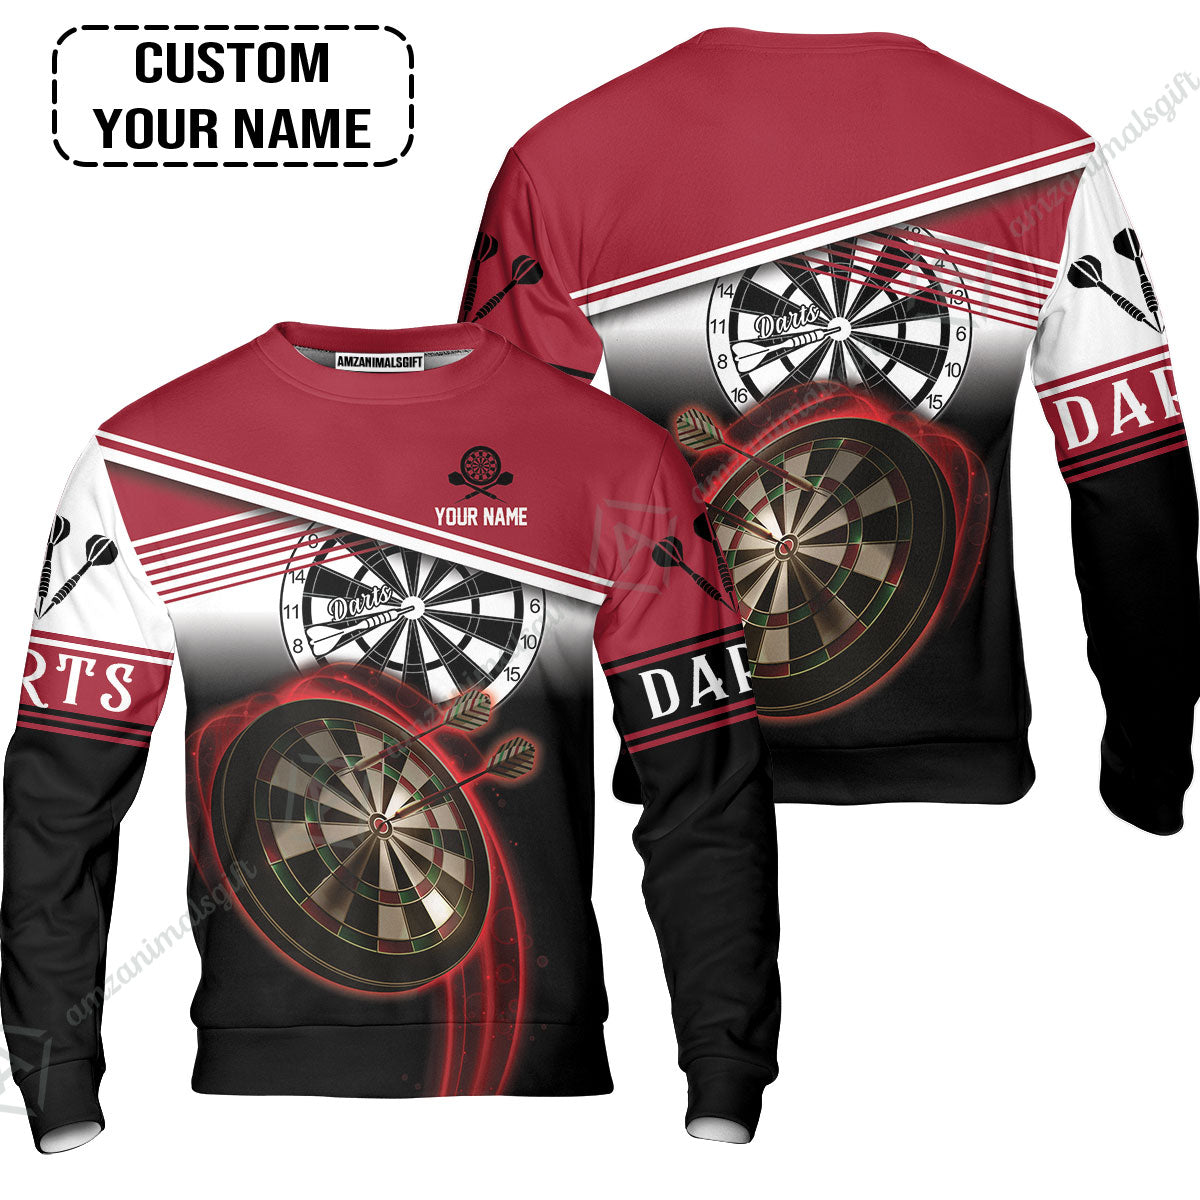 Personalised Darts Sweatshirt, Darts Red Black & White Background Custom Name Sweatshirt